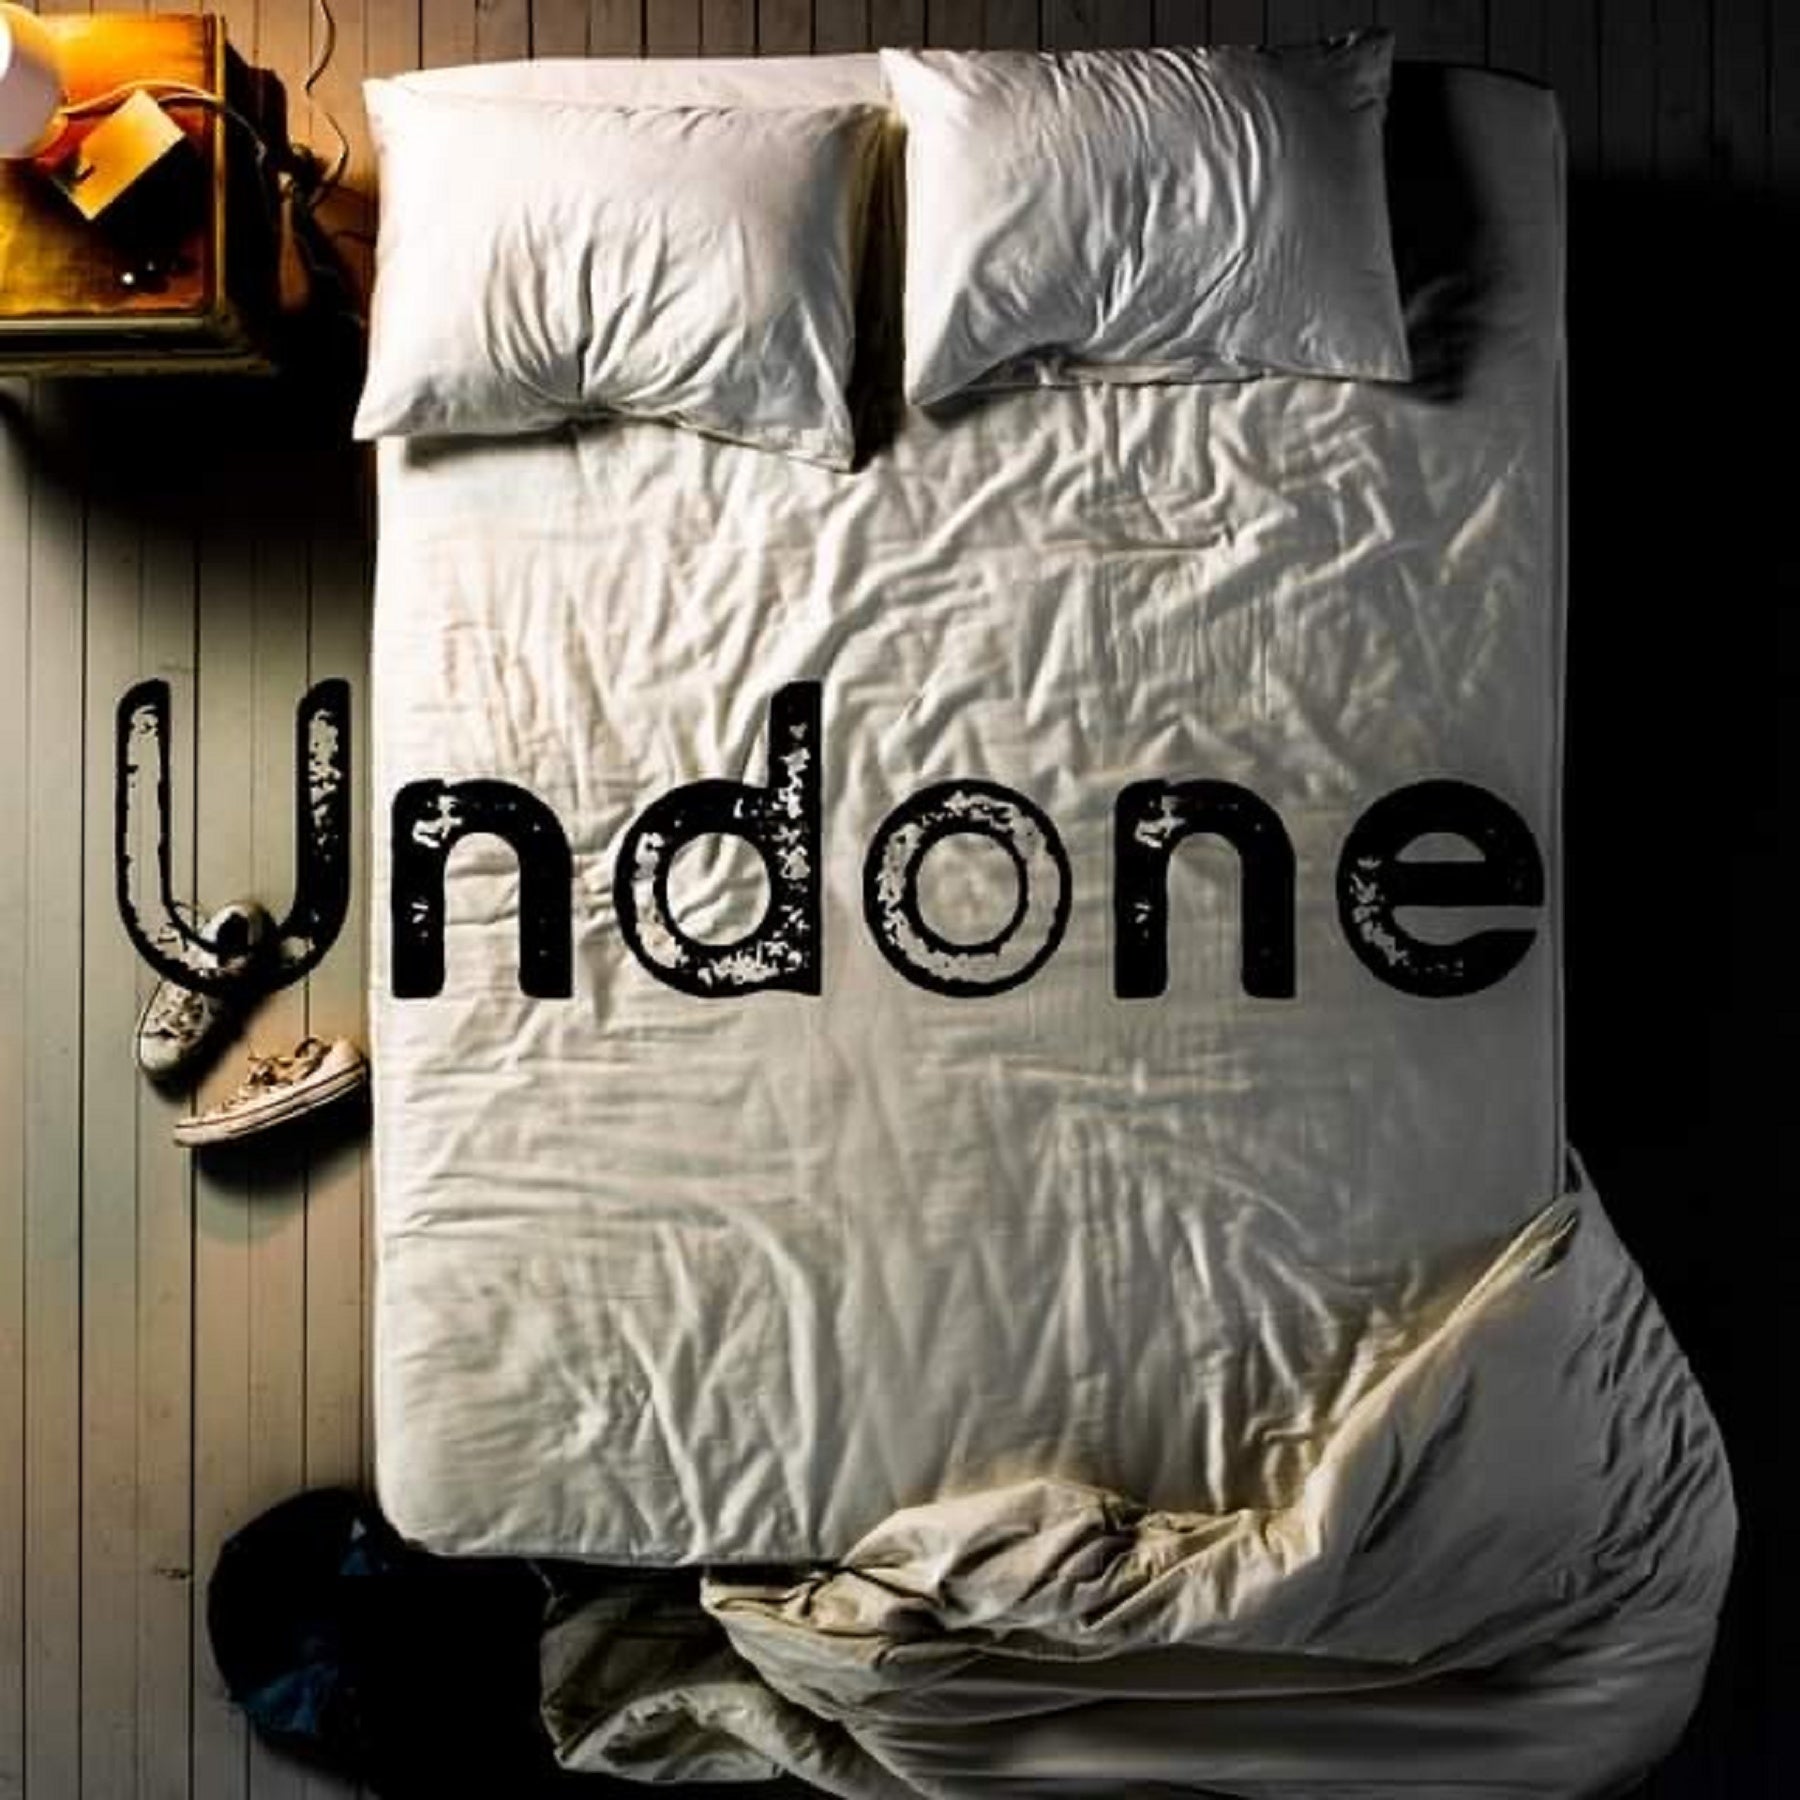 Tr1ple – ‘Undone’ (feat. Kayla Jaye)